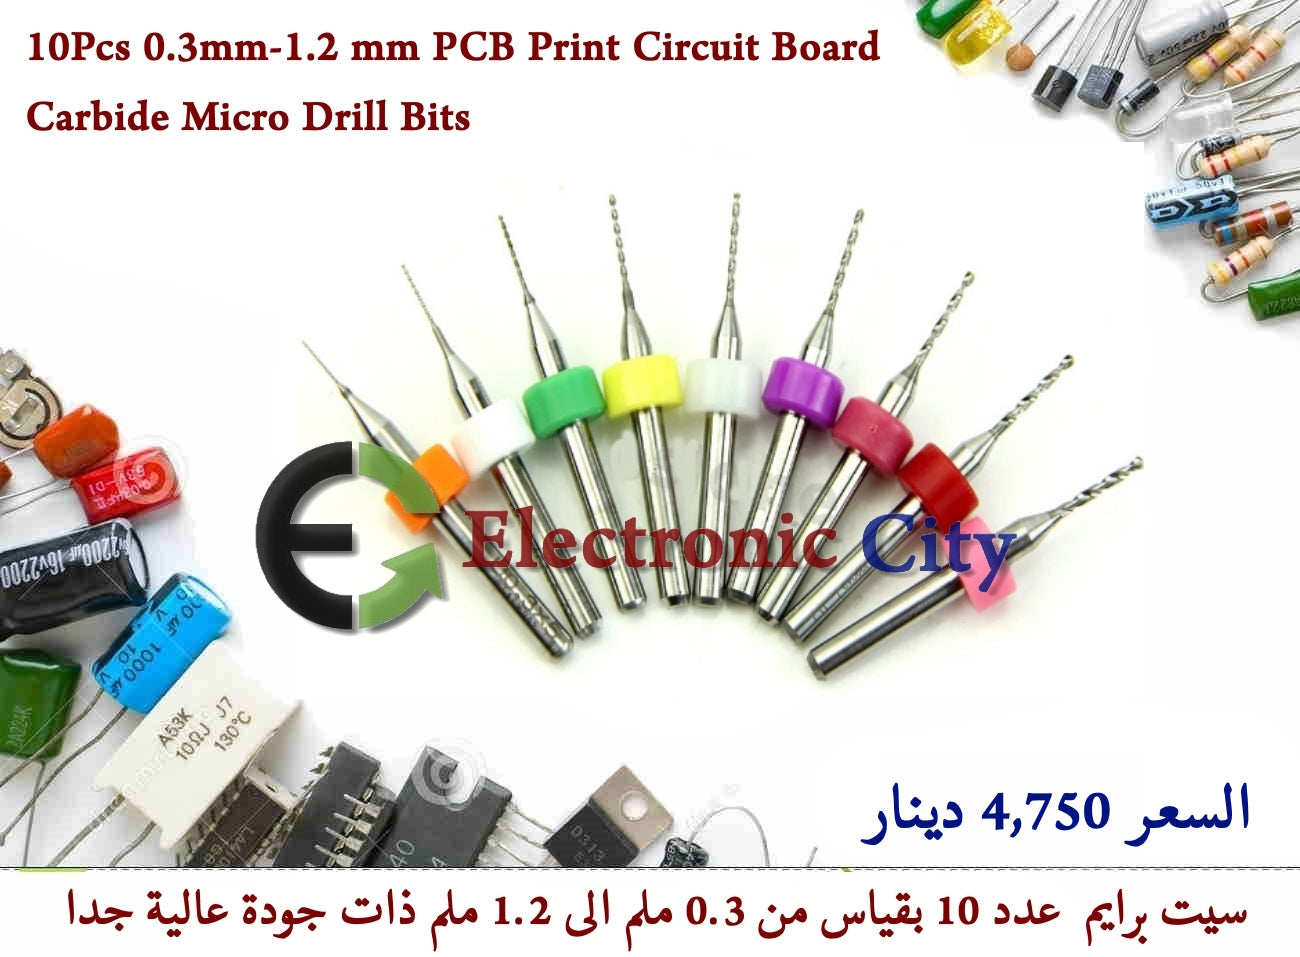 10Pcs 0.3mm-1.2 mm PCB Print Circuit Board Carbide Micro Drill Bits #B5 0502343